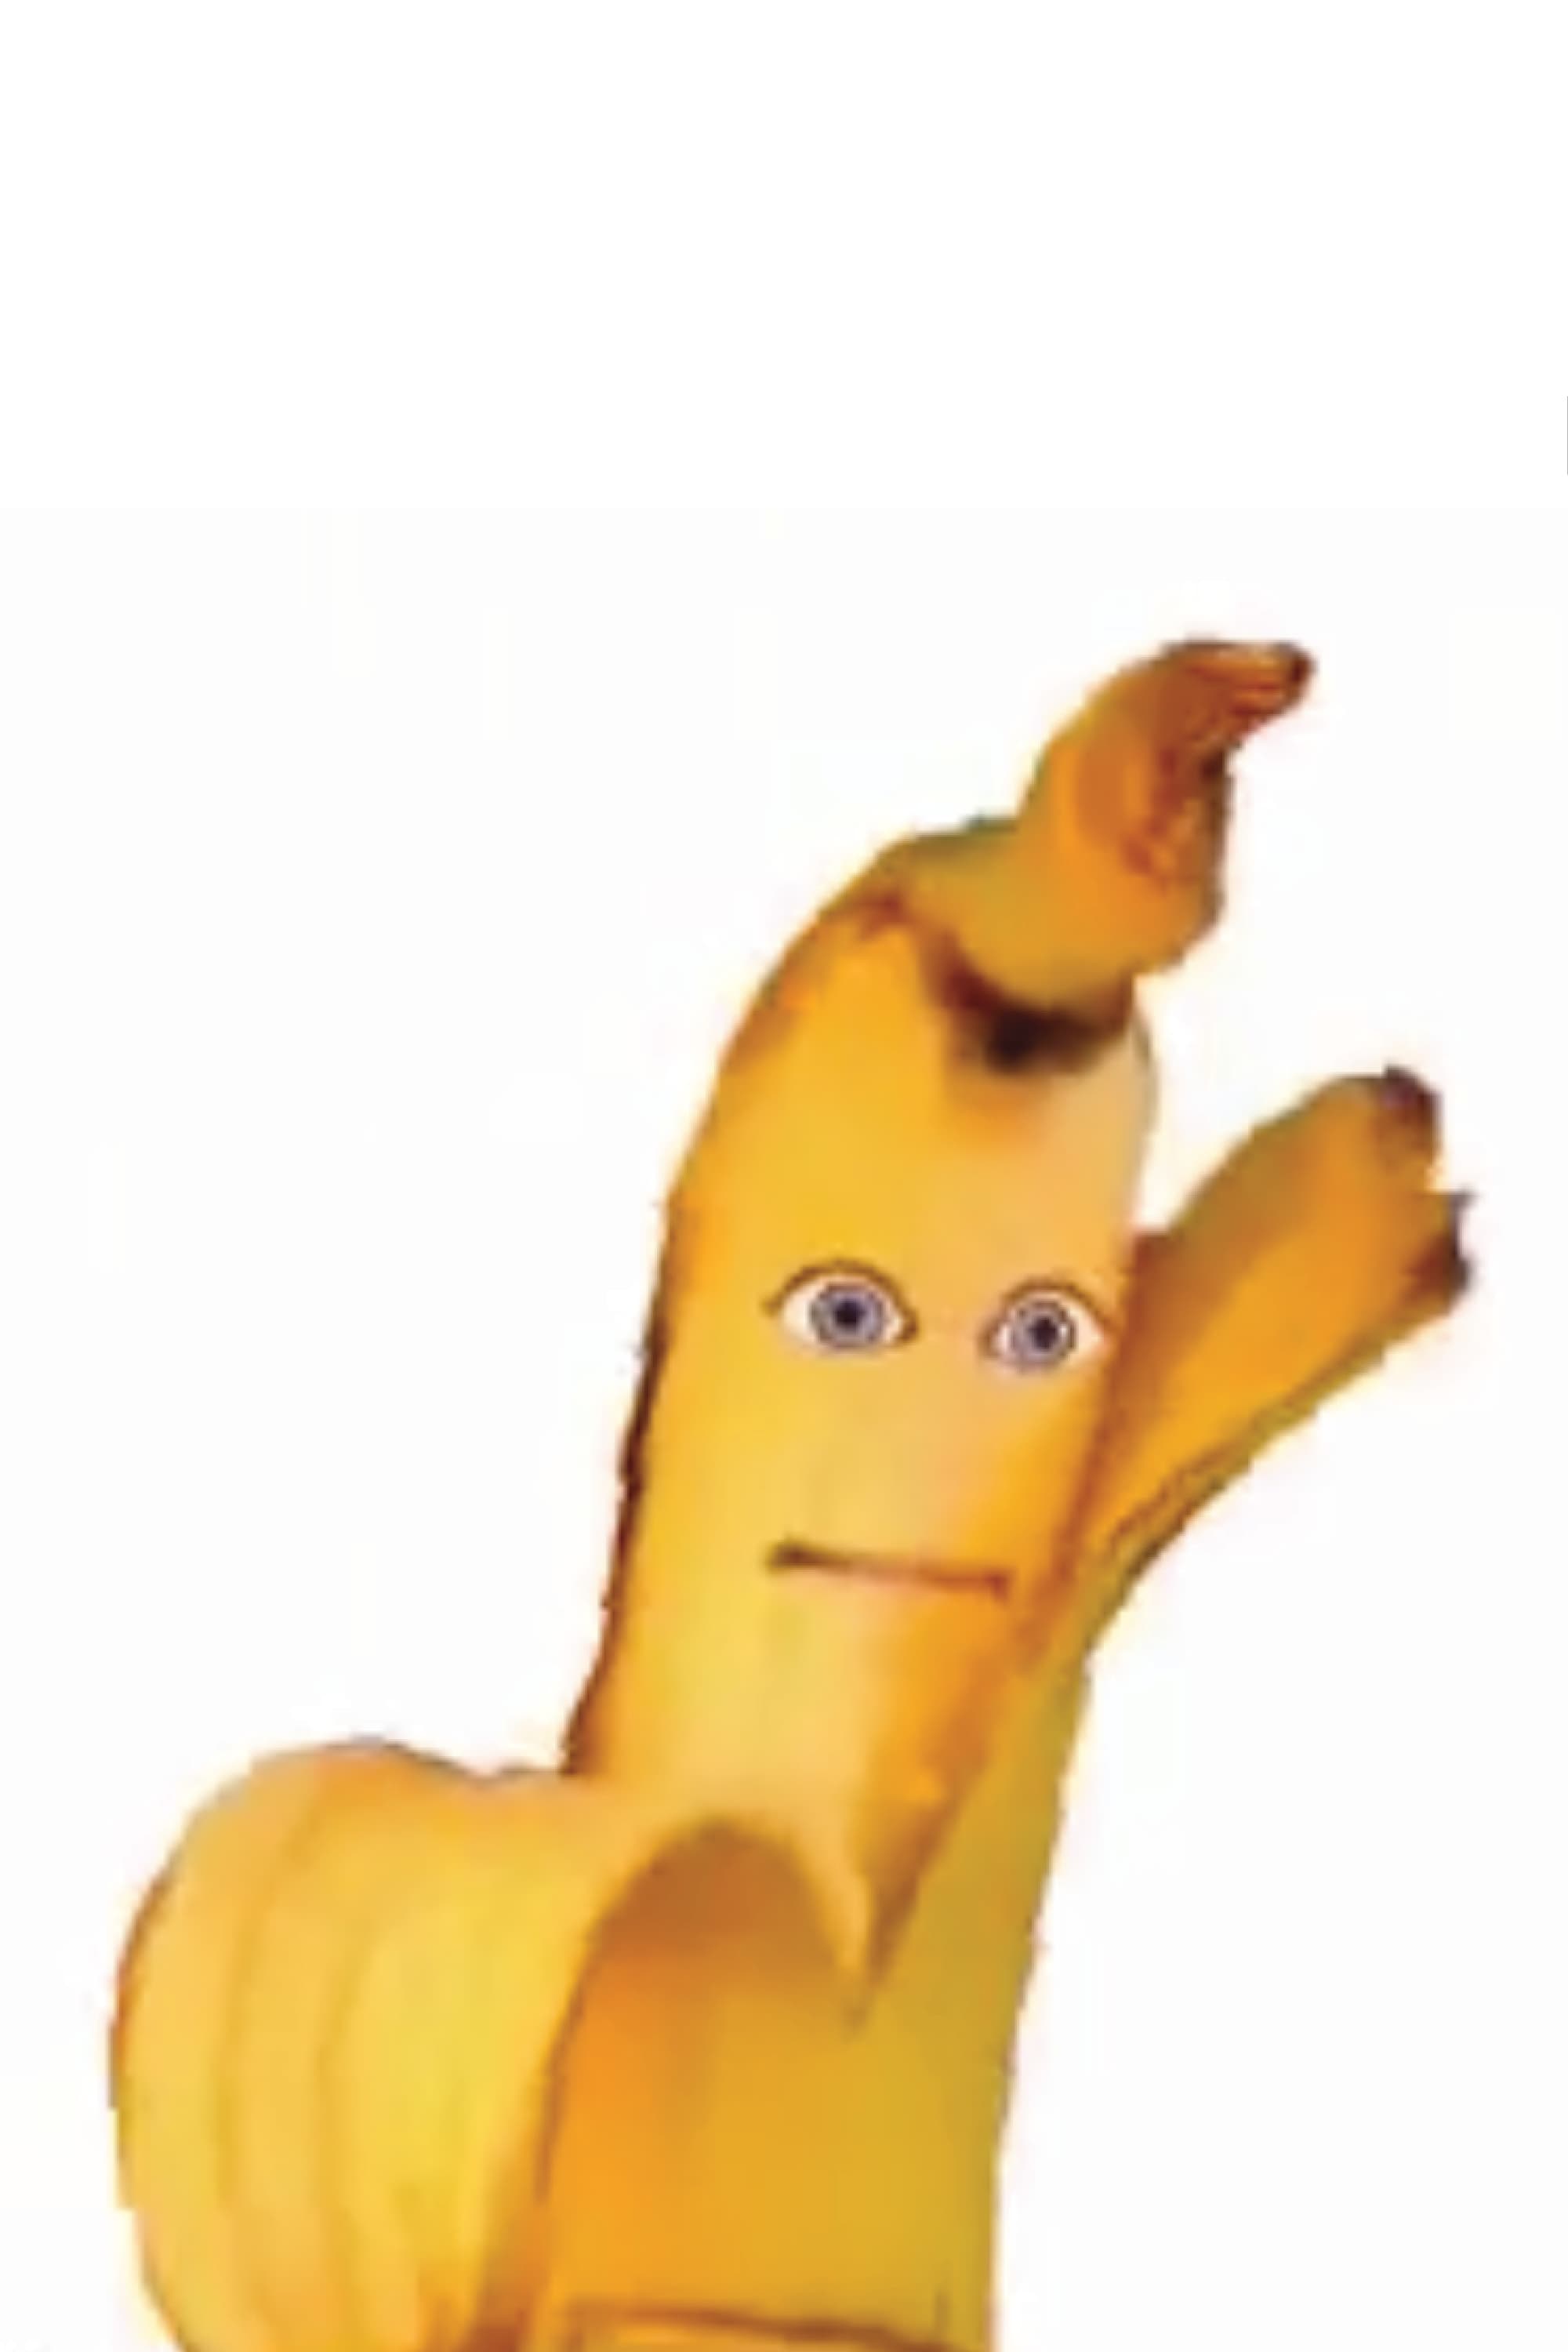 Bana Nah Nah Nah - The Banana Rap Song